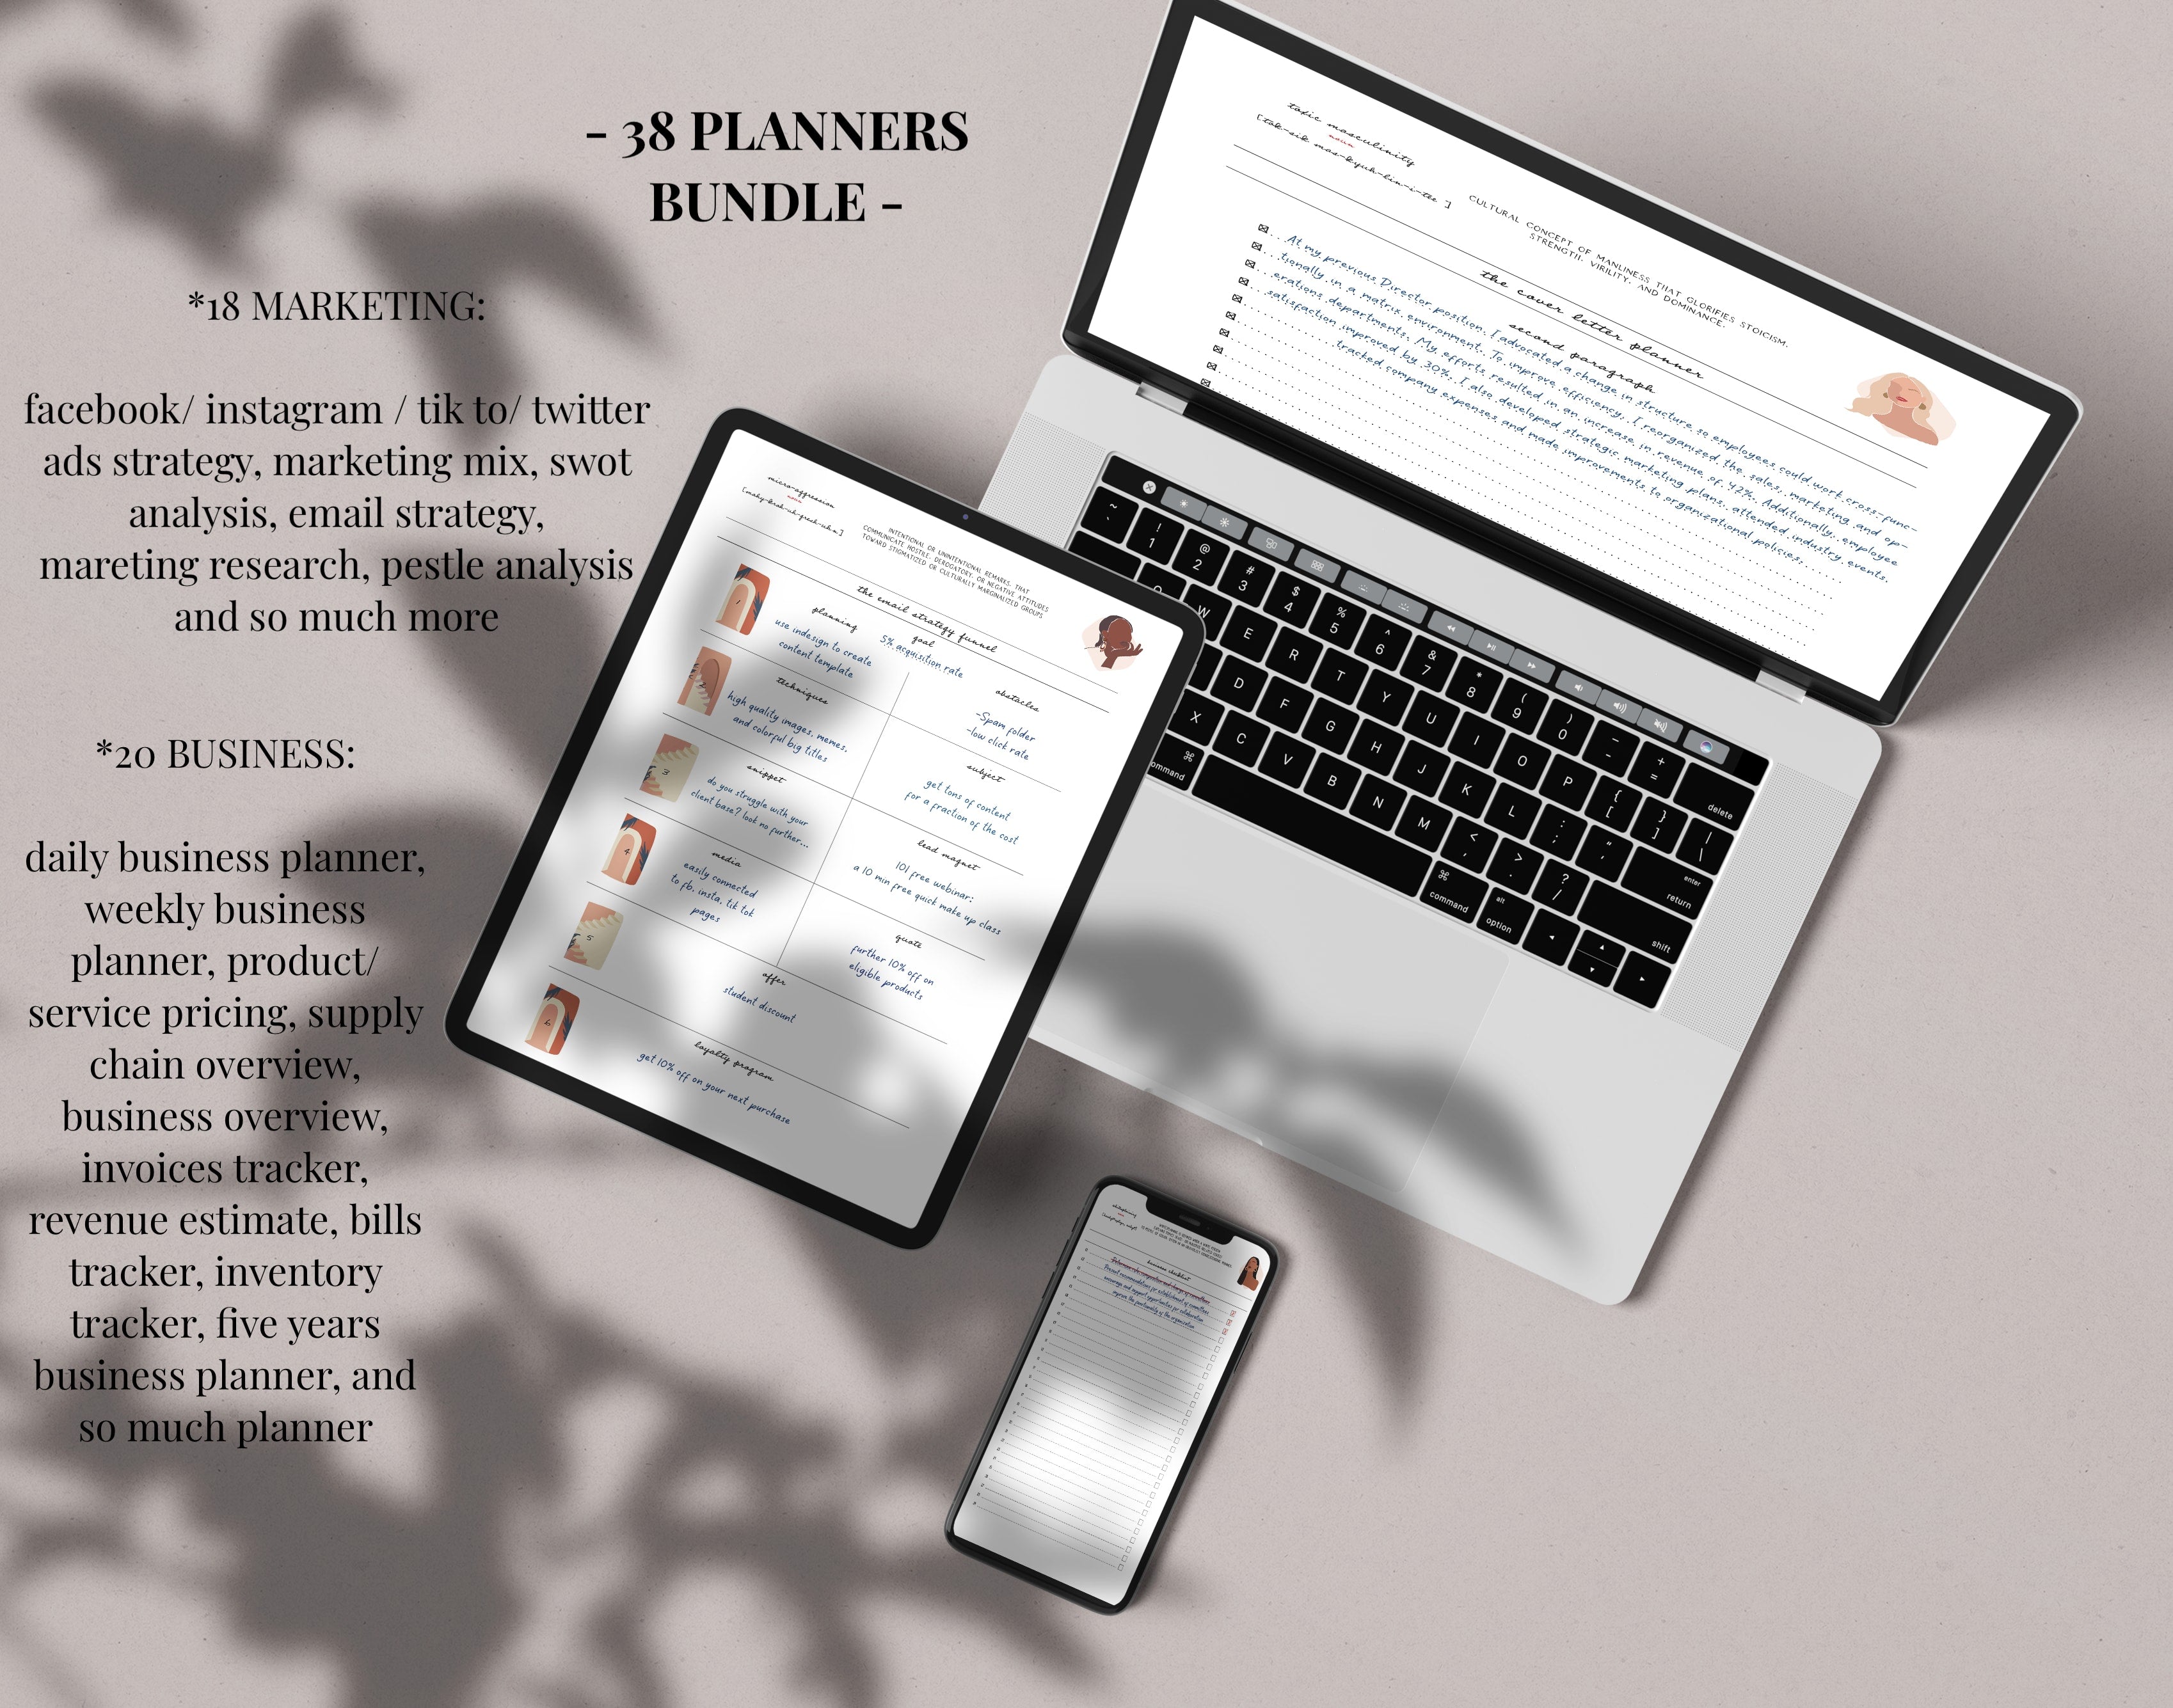 Business & Marketing Bundle - 38 planners